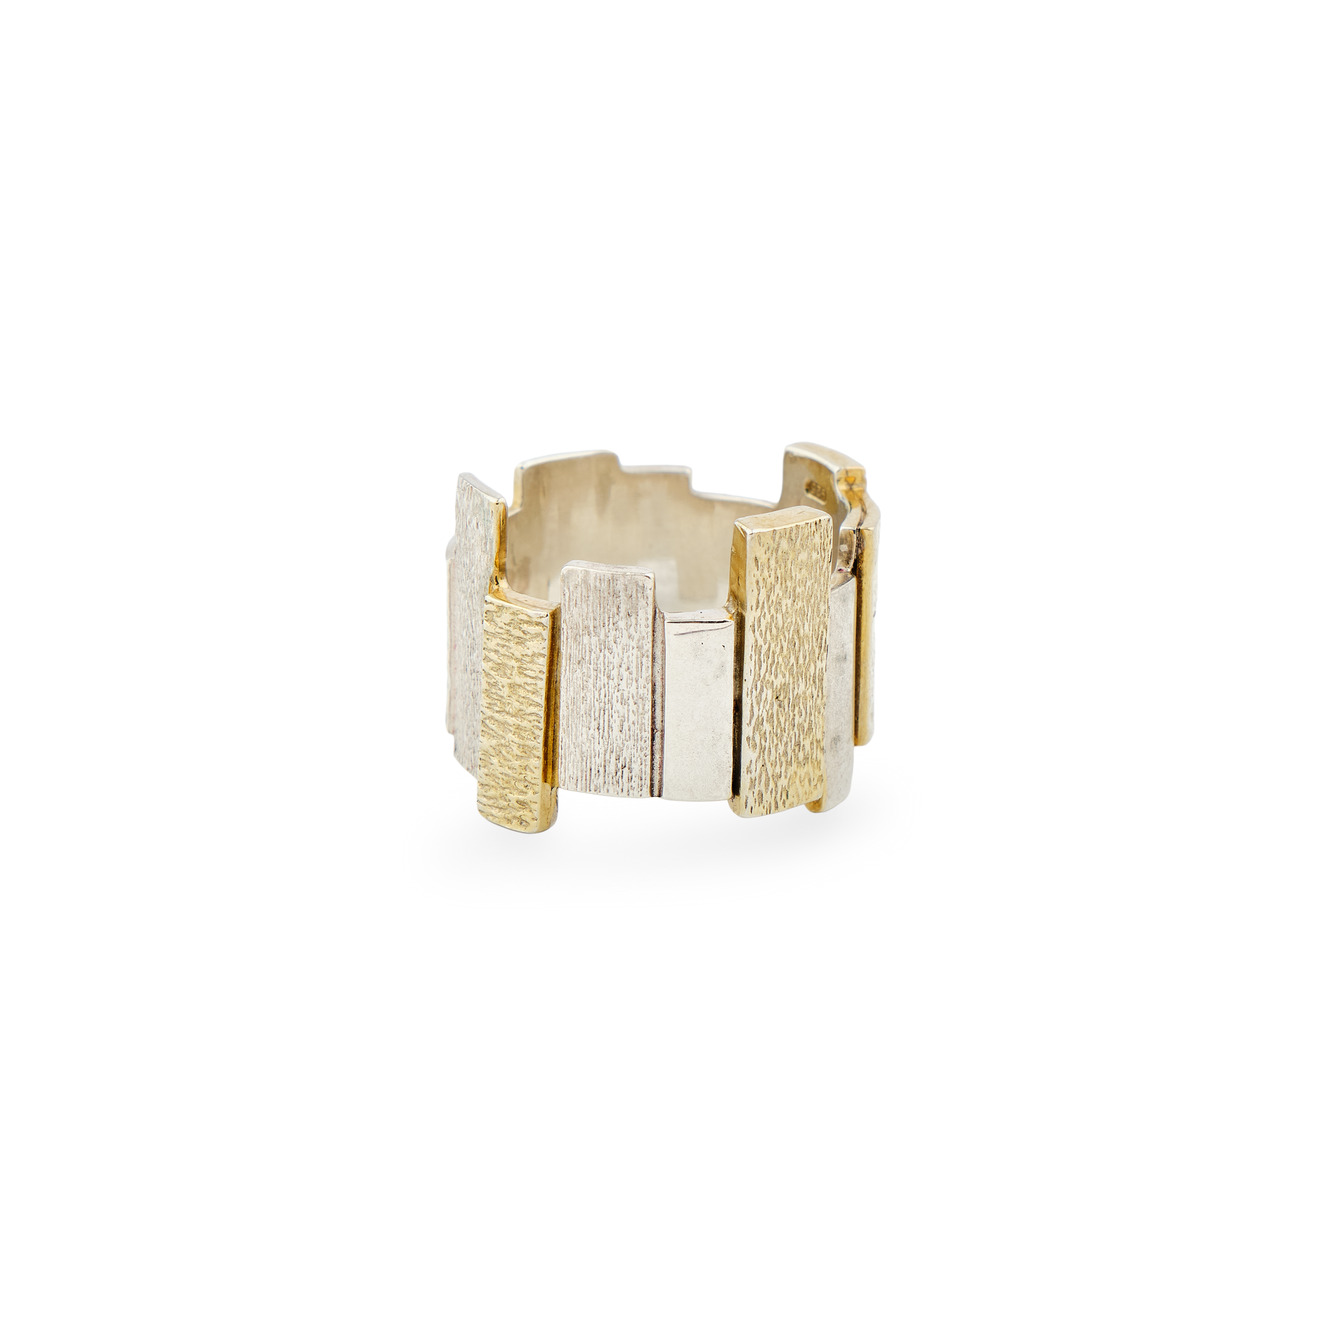 УРА jewelry Биколорное фактурное кольцо-город из серебра lisa smith биколорное кольцо из двух половин